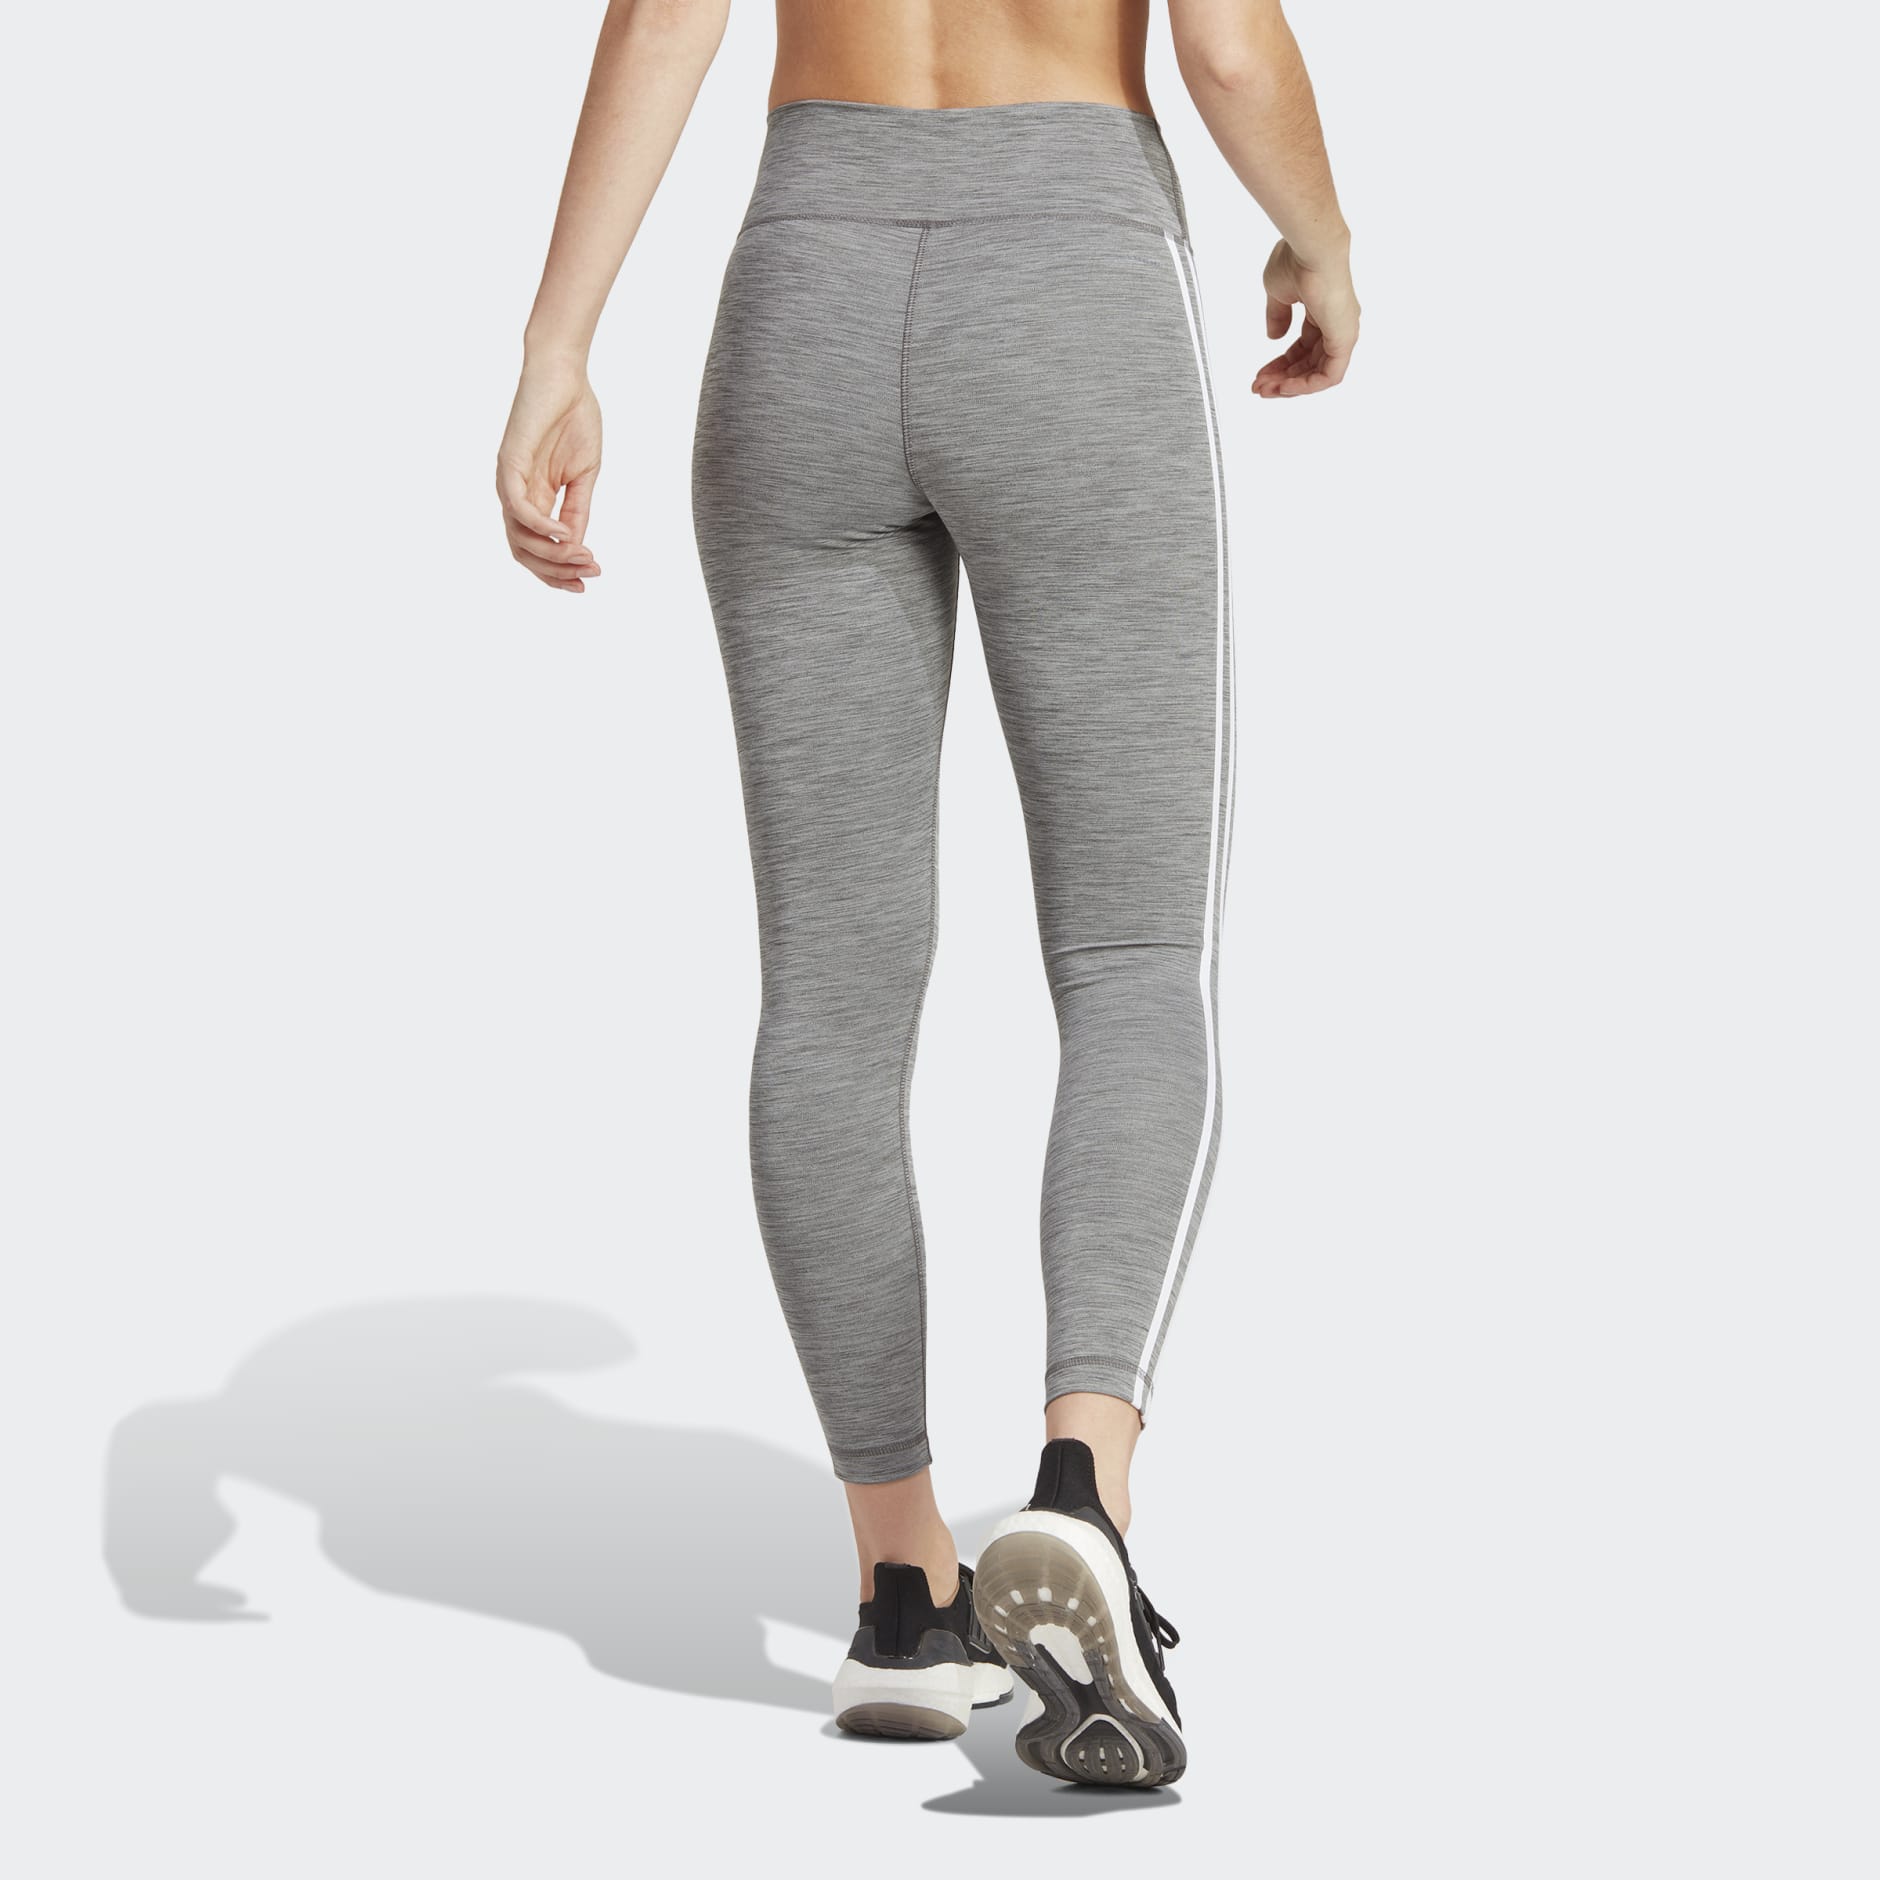 Buy adidas 3 Stripes Velcro Training Pants Women Grey, White online |  Tennis Point COM